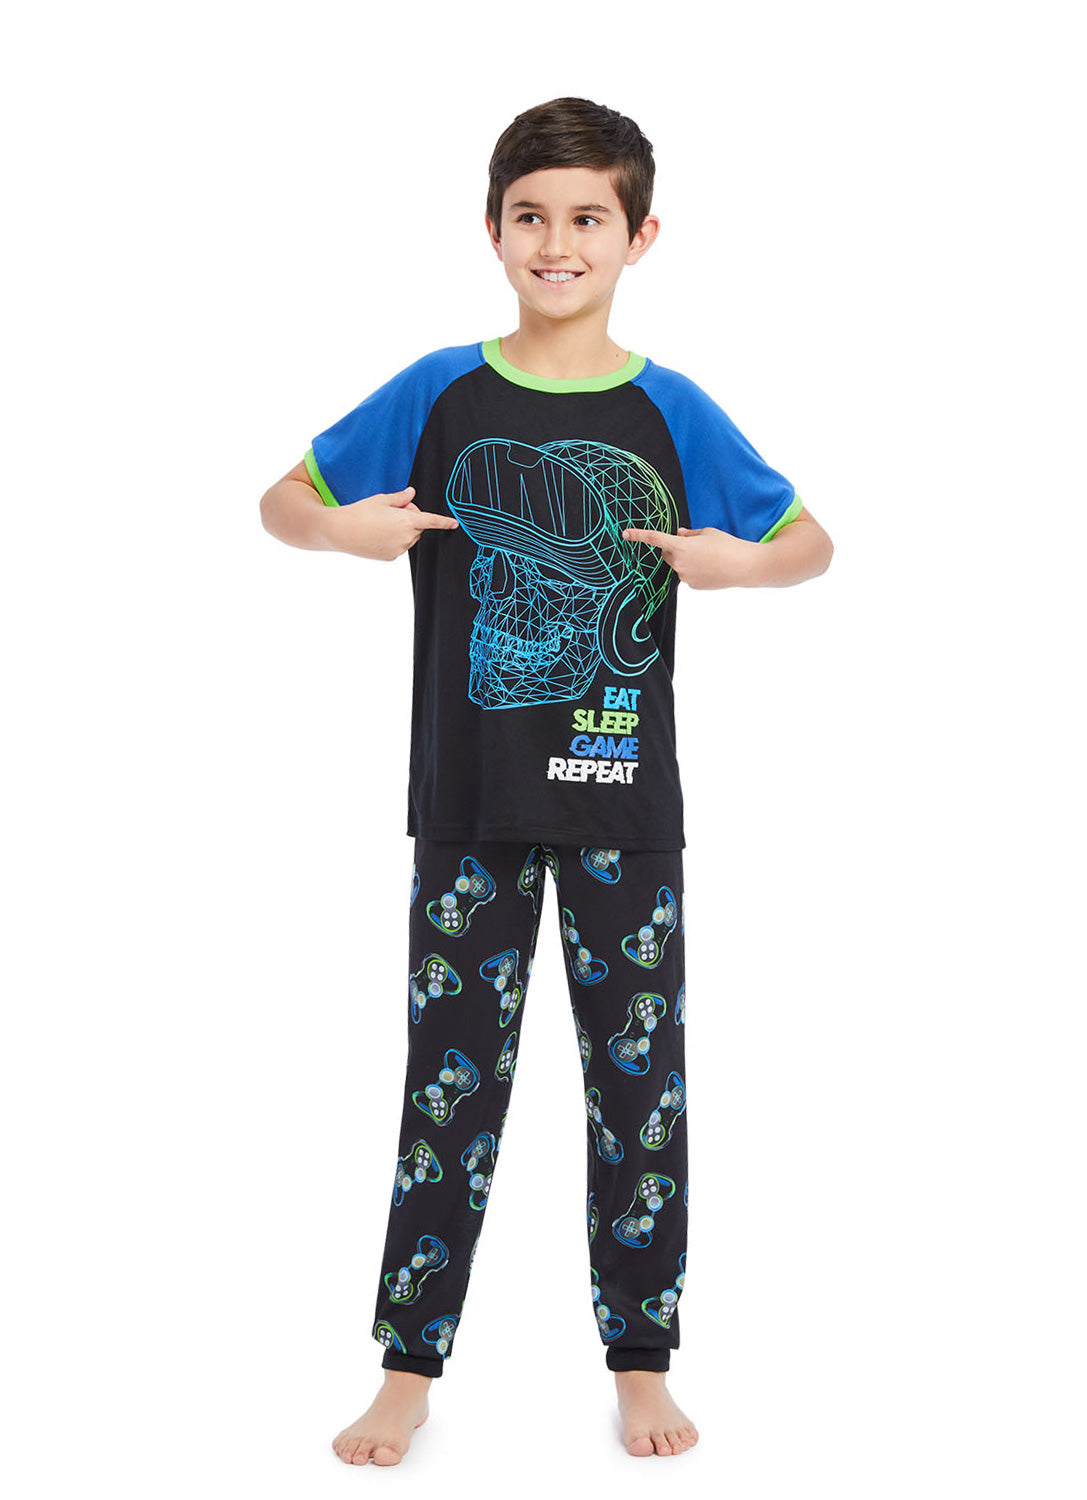 Boy wearing Pajama Set Gamer, t-shirt (black & blue) with print and pants (black) with print